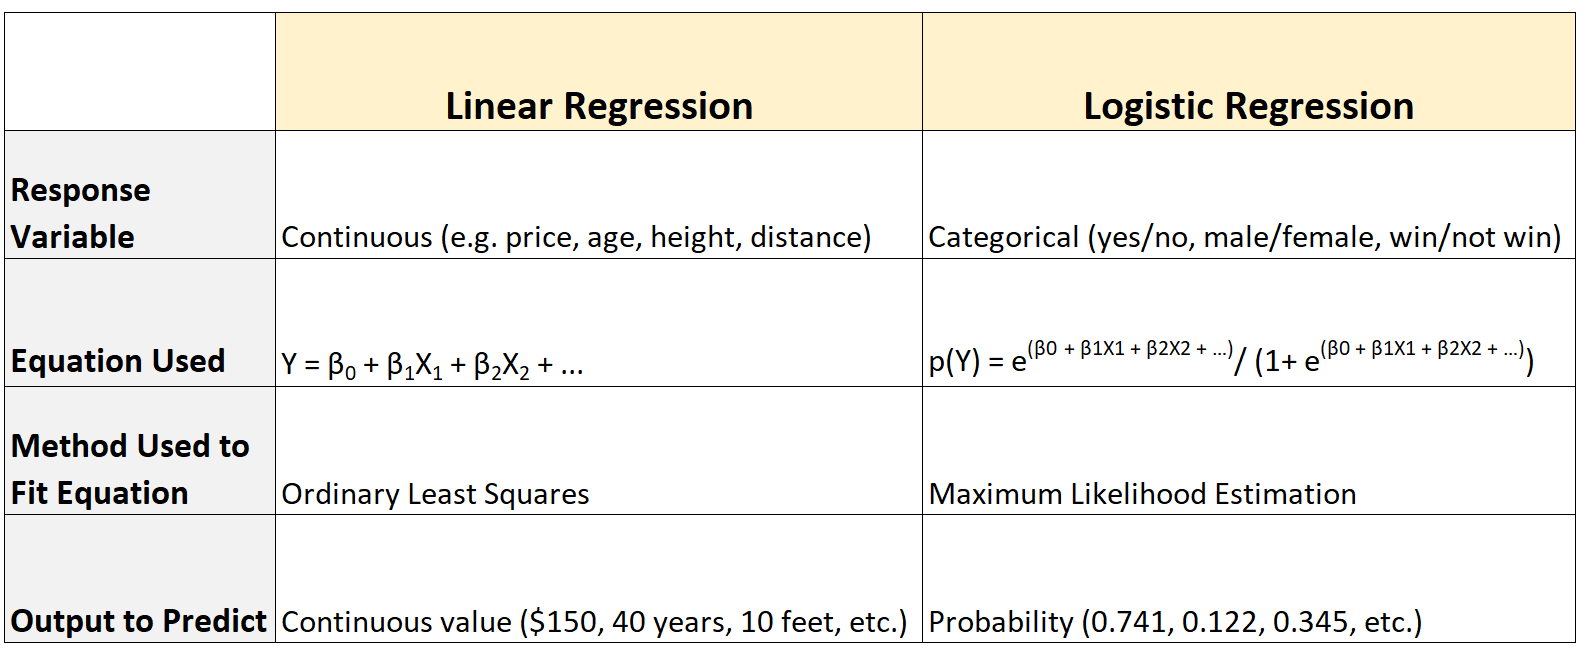 regressão logística vs regressão linear